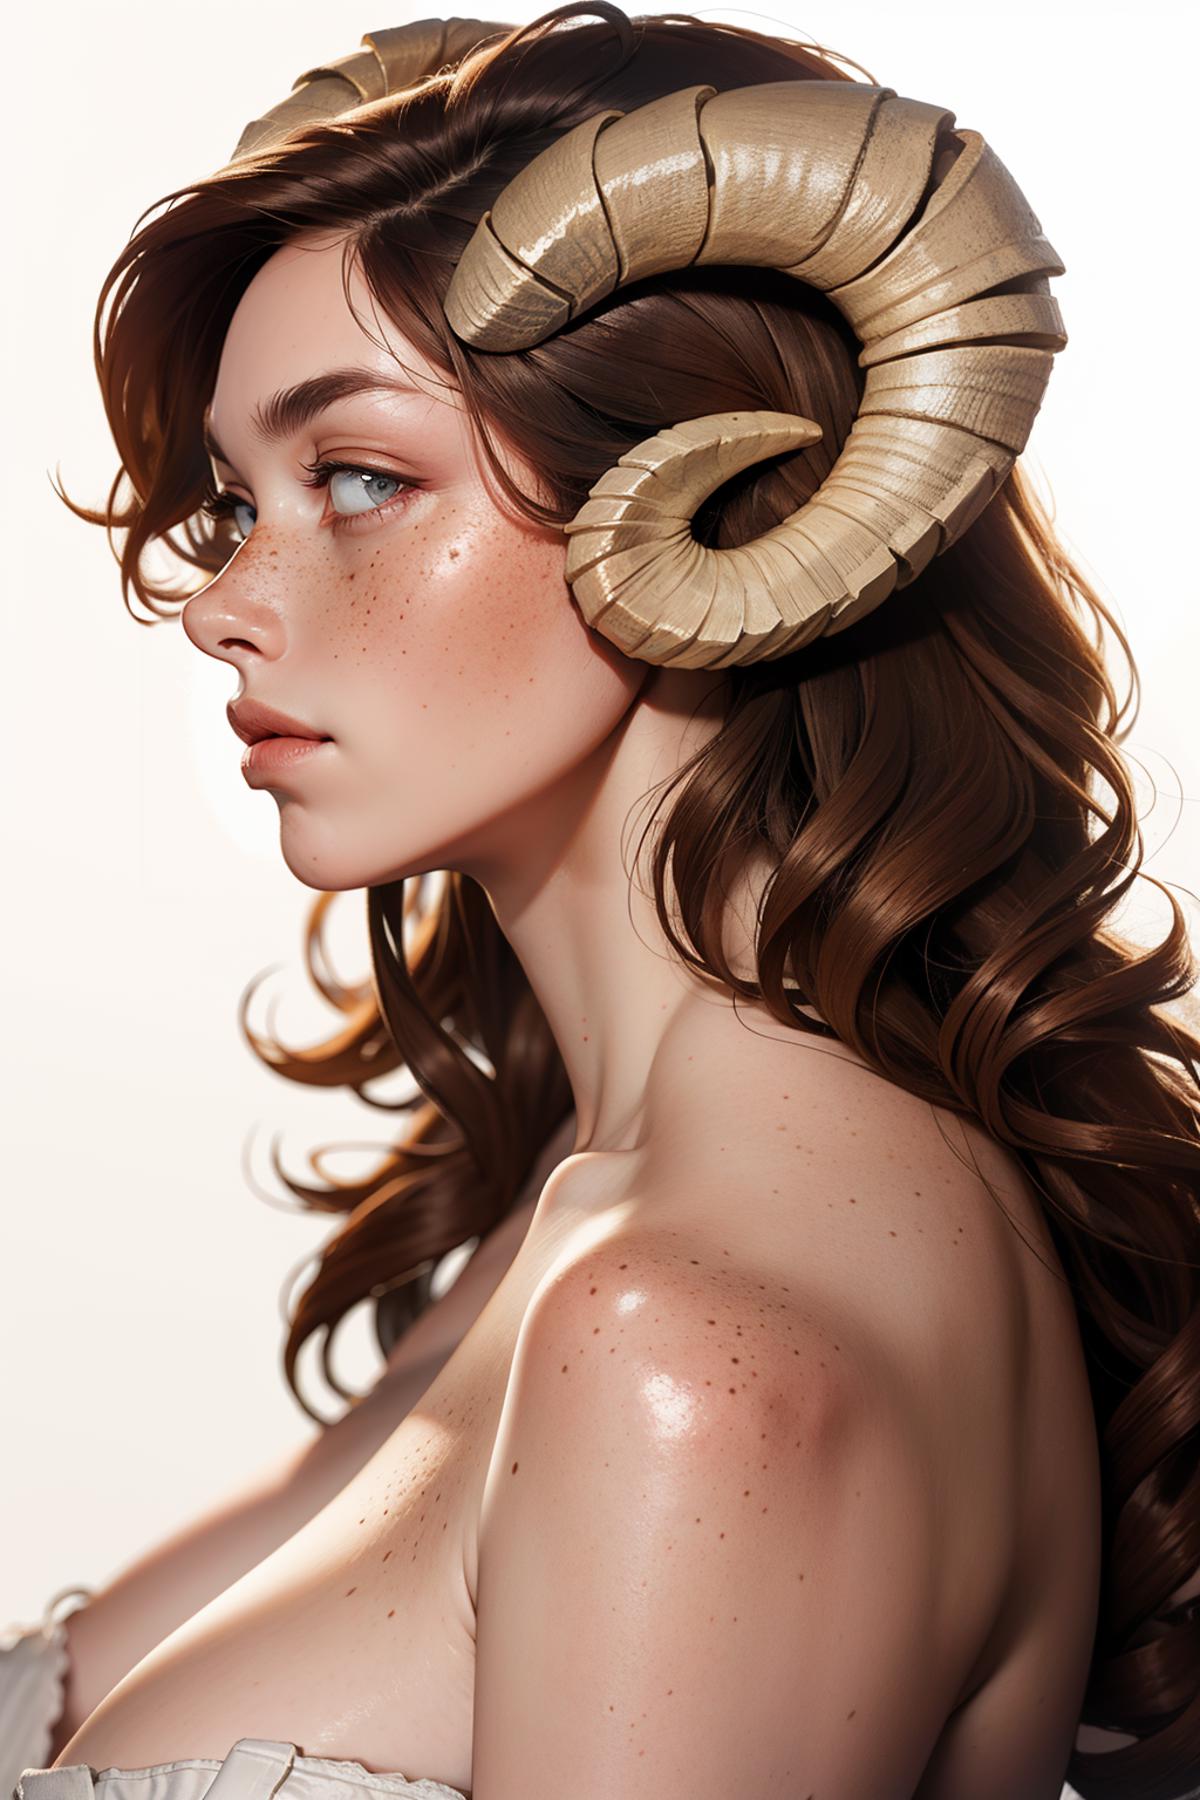 Ram Horns image by freckledvixon